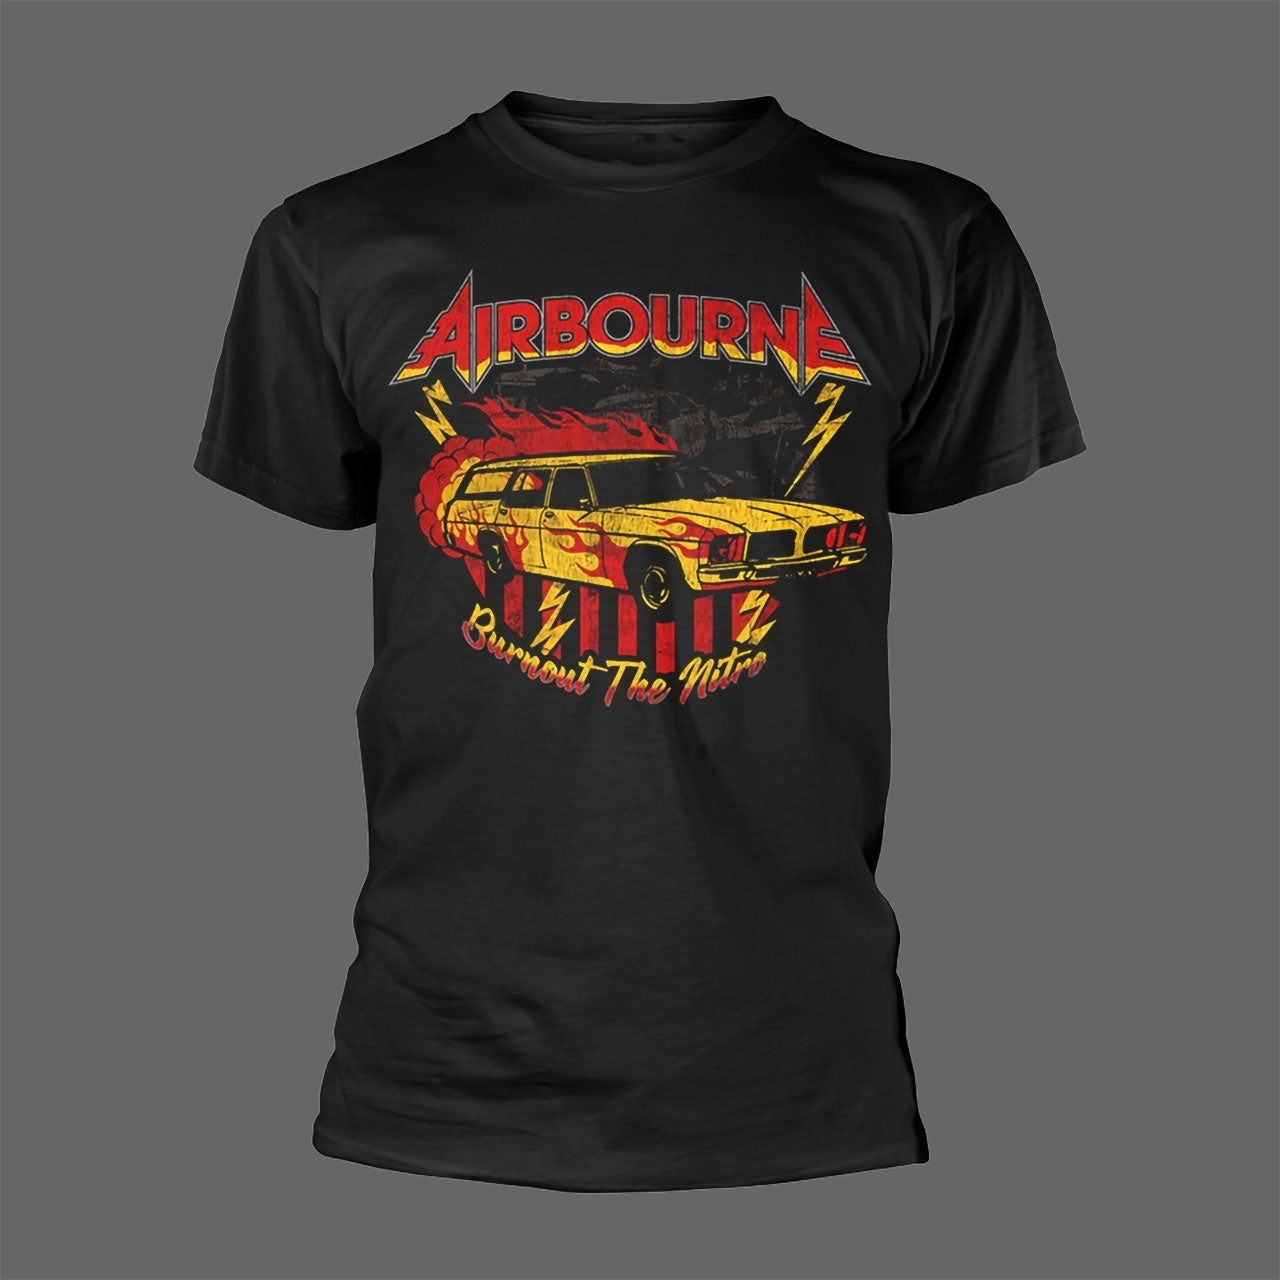 Airbourne - Burnout the Nitro (T-Shirt)